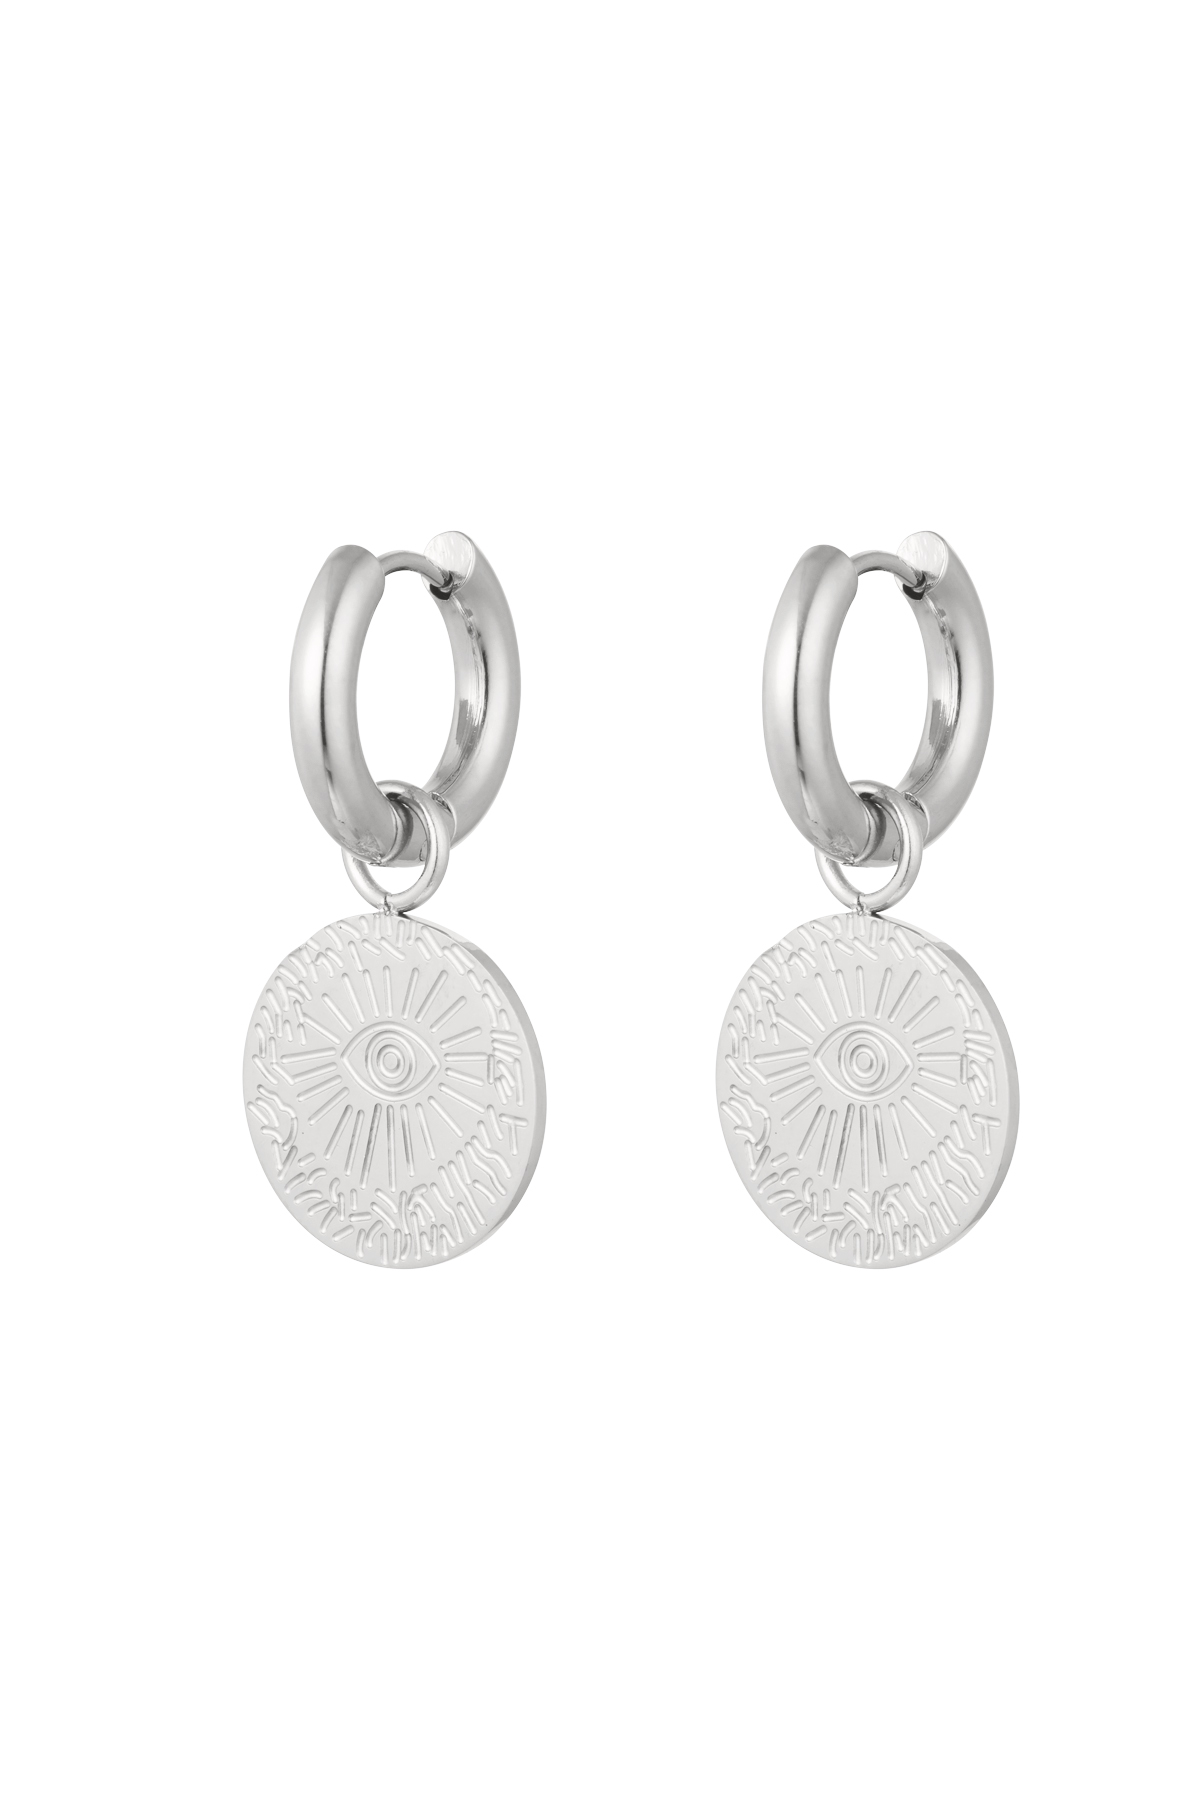 Earrings eye coin - silver Stainless Steel h5 